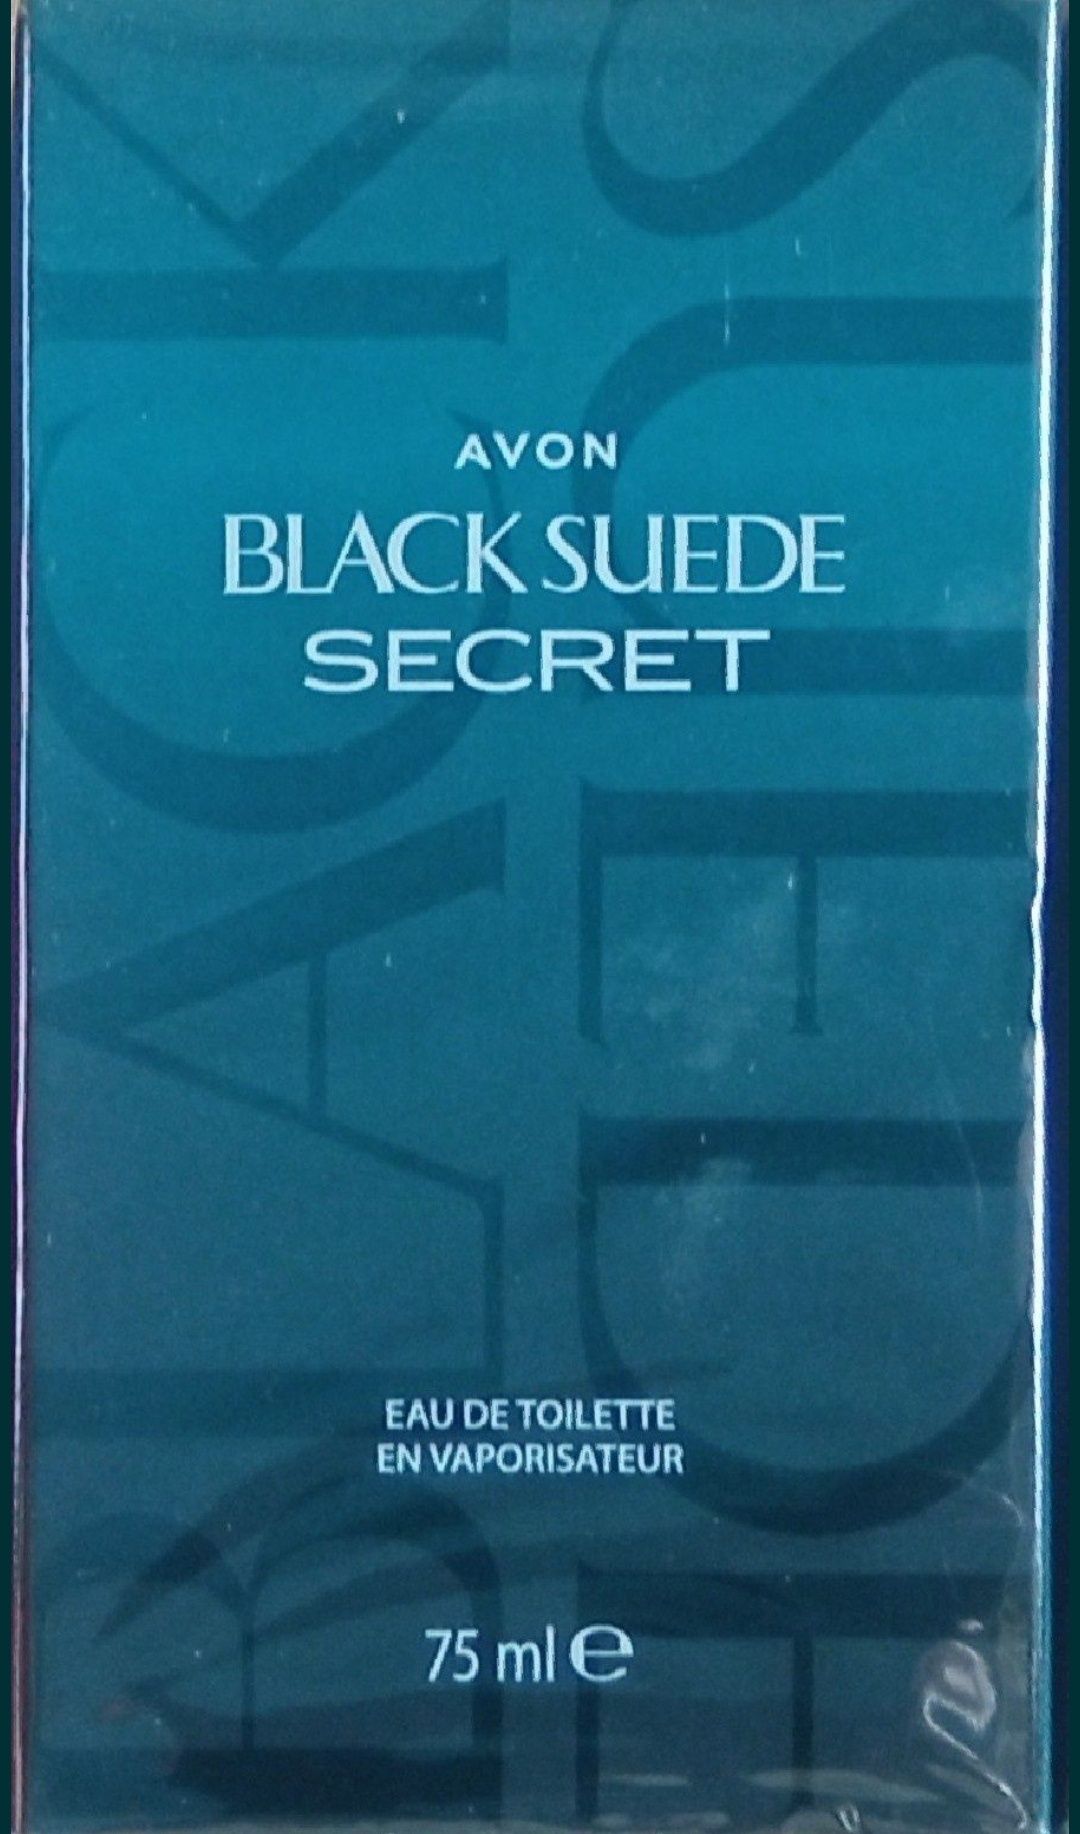 Black Suede secret